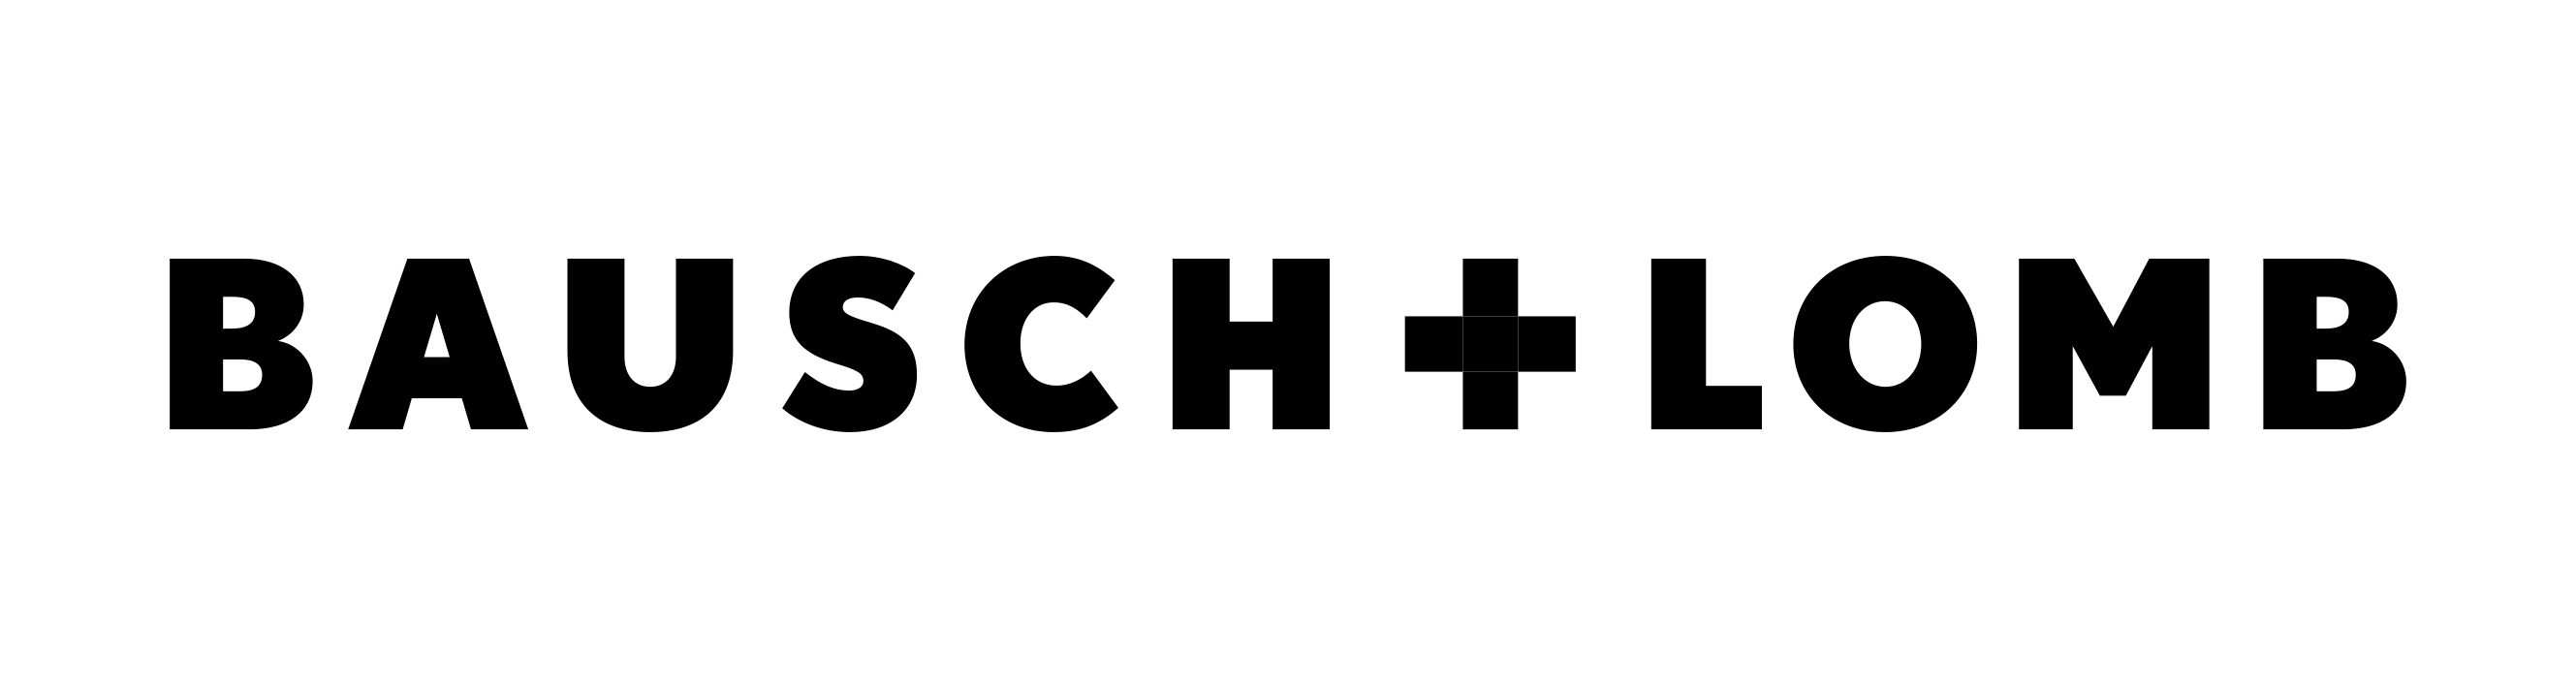 Bausch_&_Lomb-Logo.wine-black